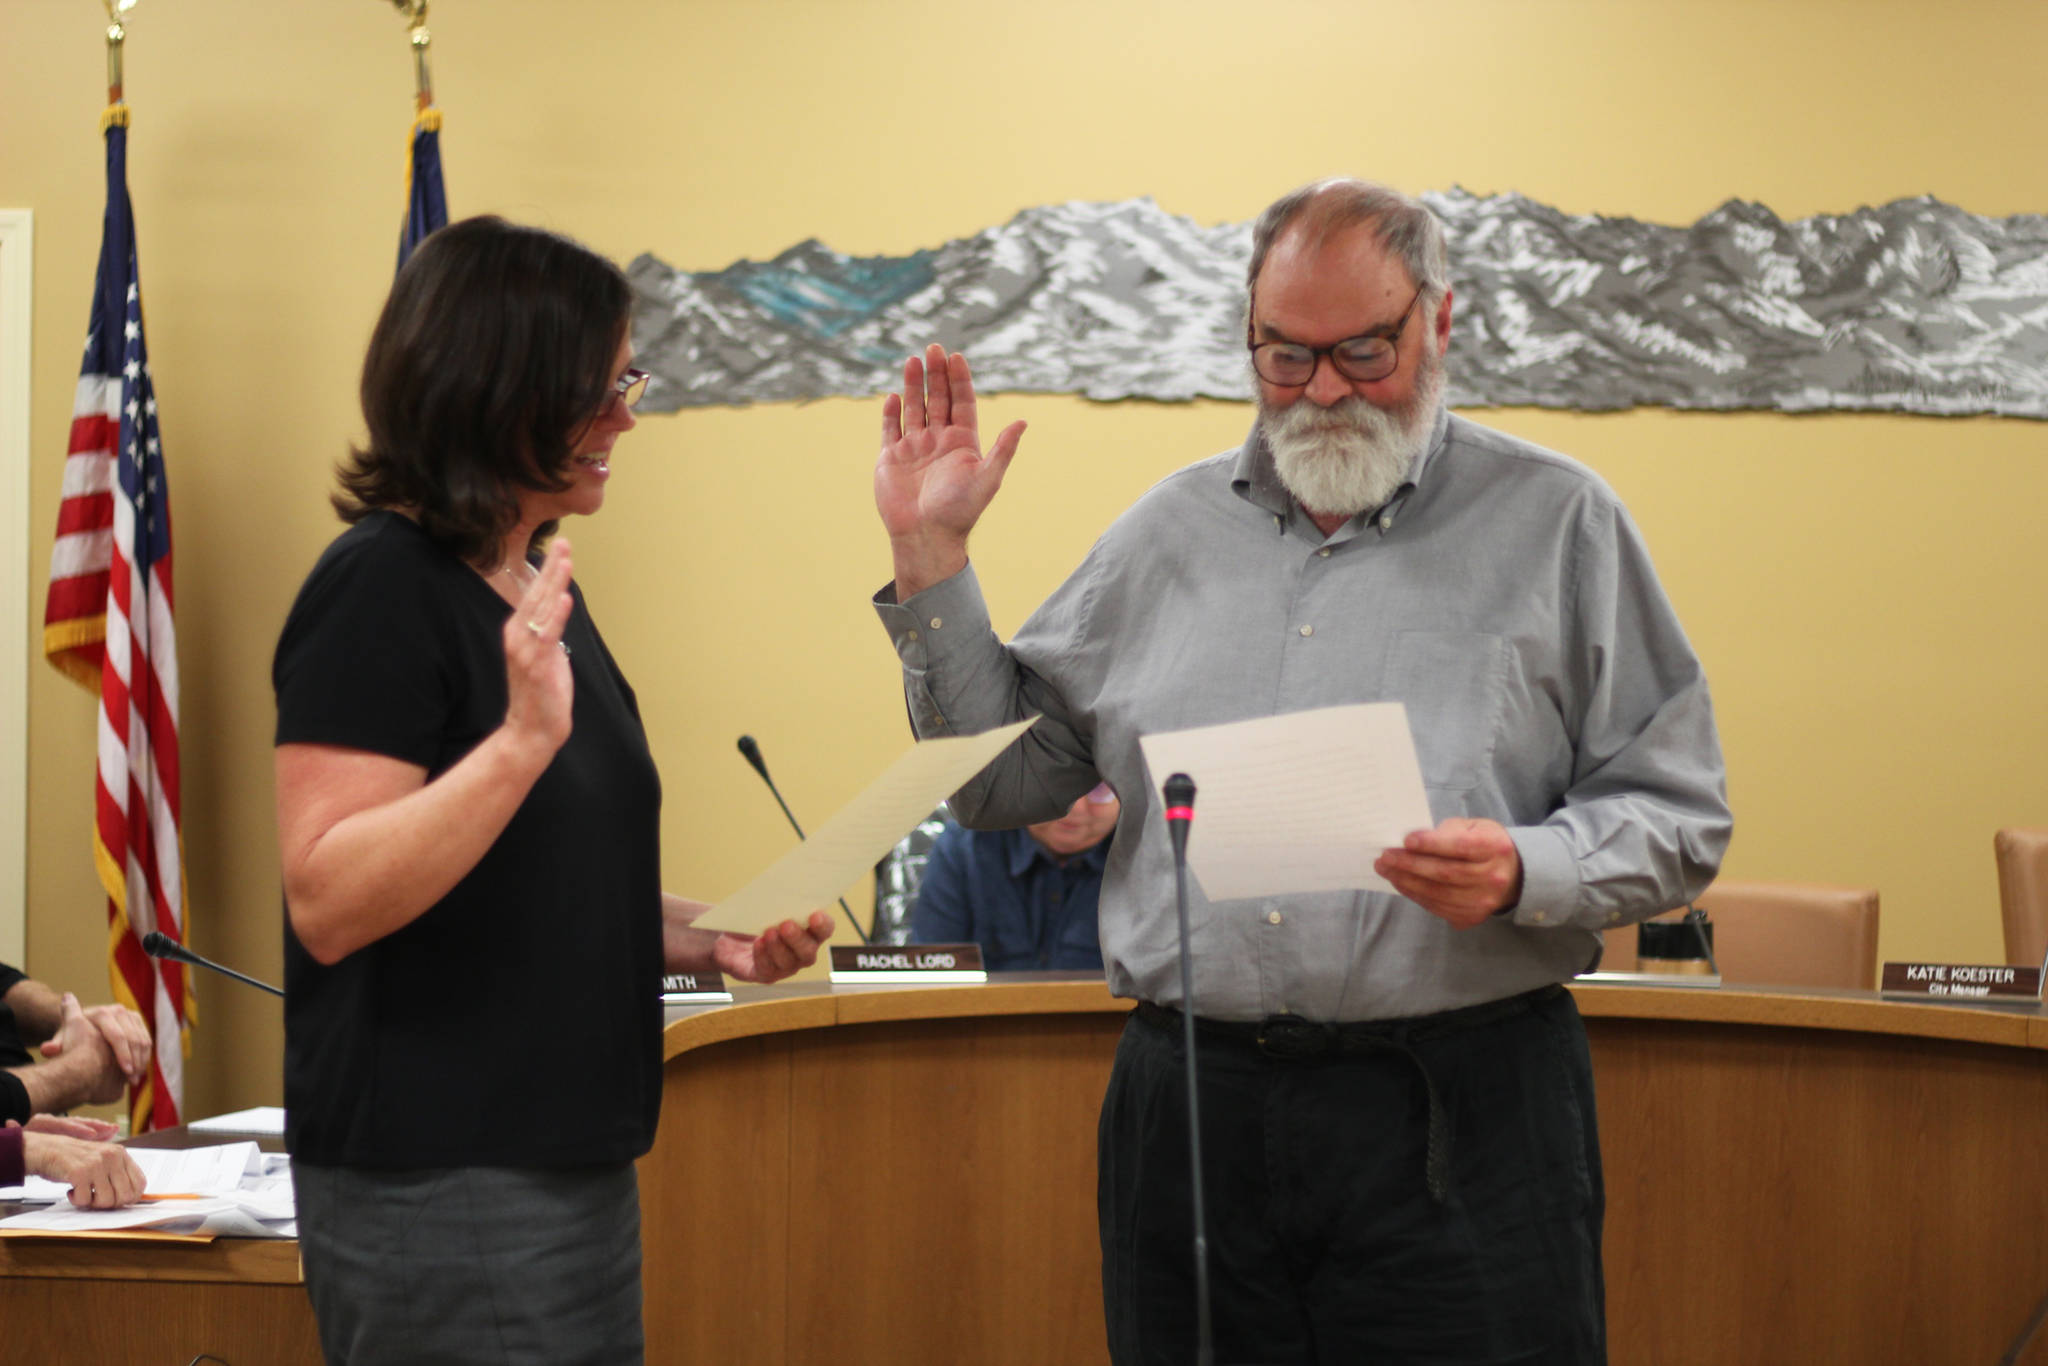 Ken Castner is sworn in as the new mayor of Homer on Monday, Oct. 8, 2018 at Homer City Hall in Homer, Alaska. (Photo by Megan Pacer/Homer News)